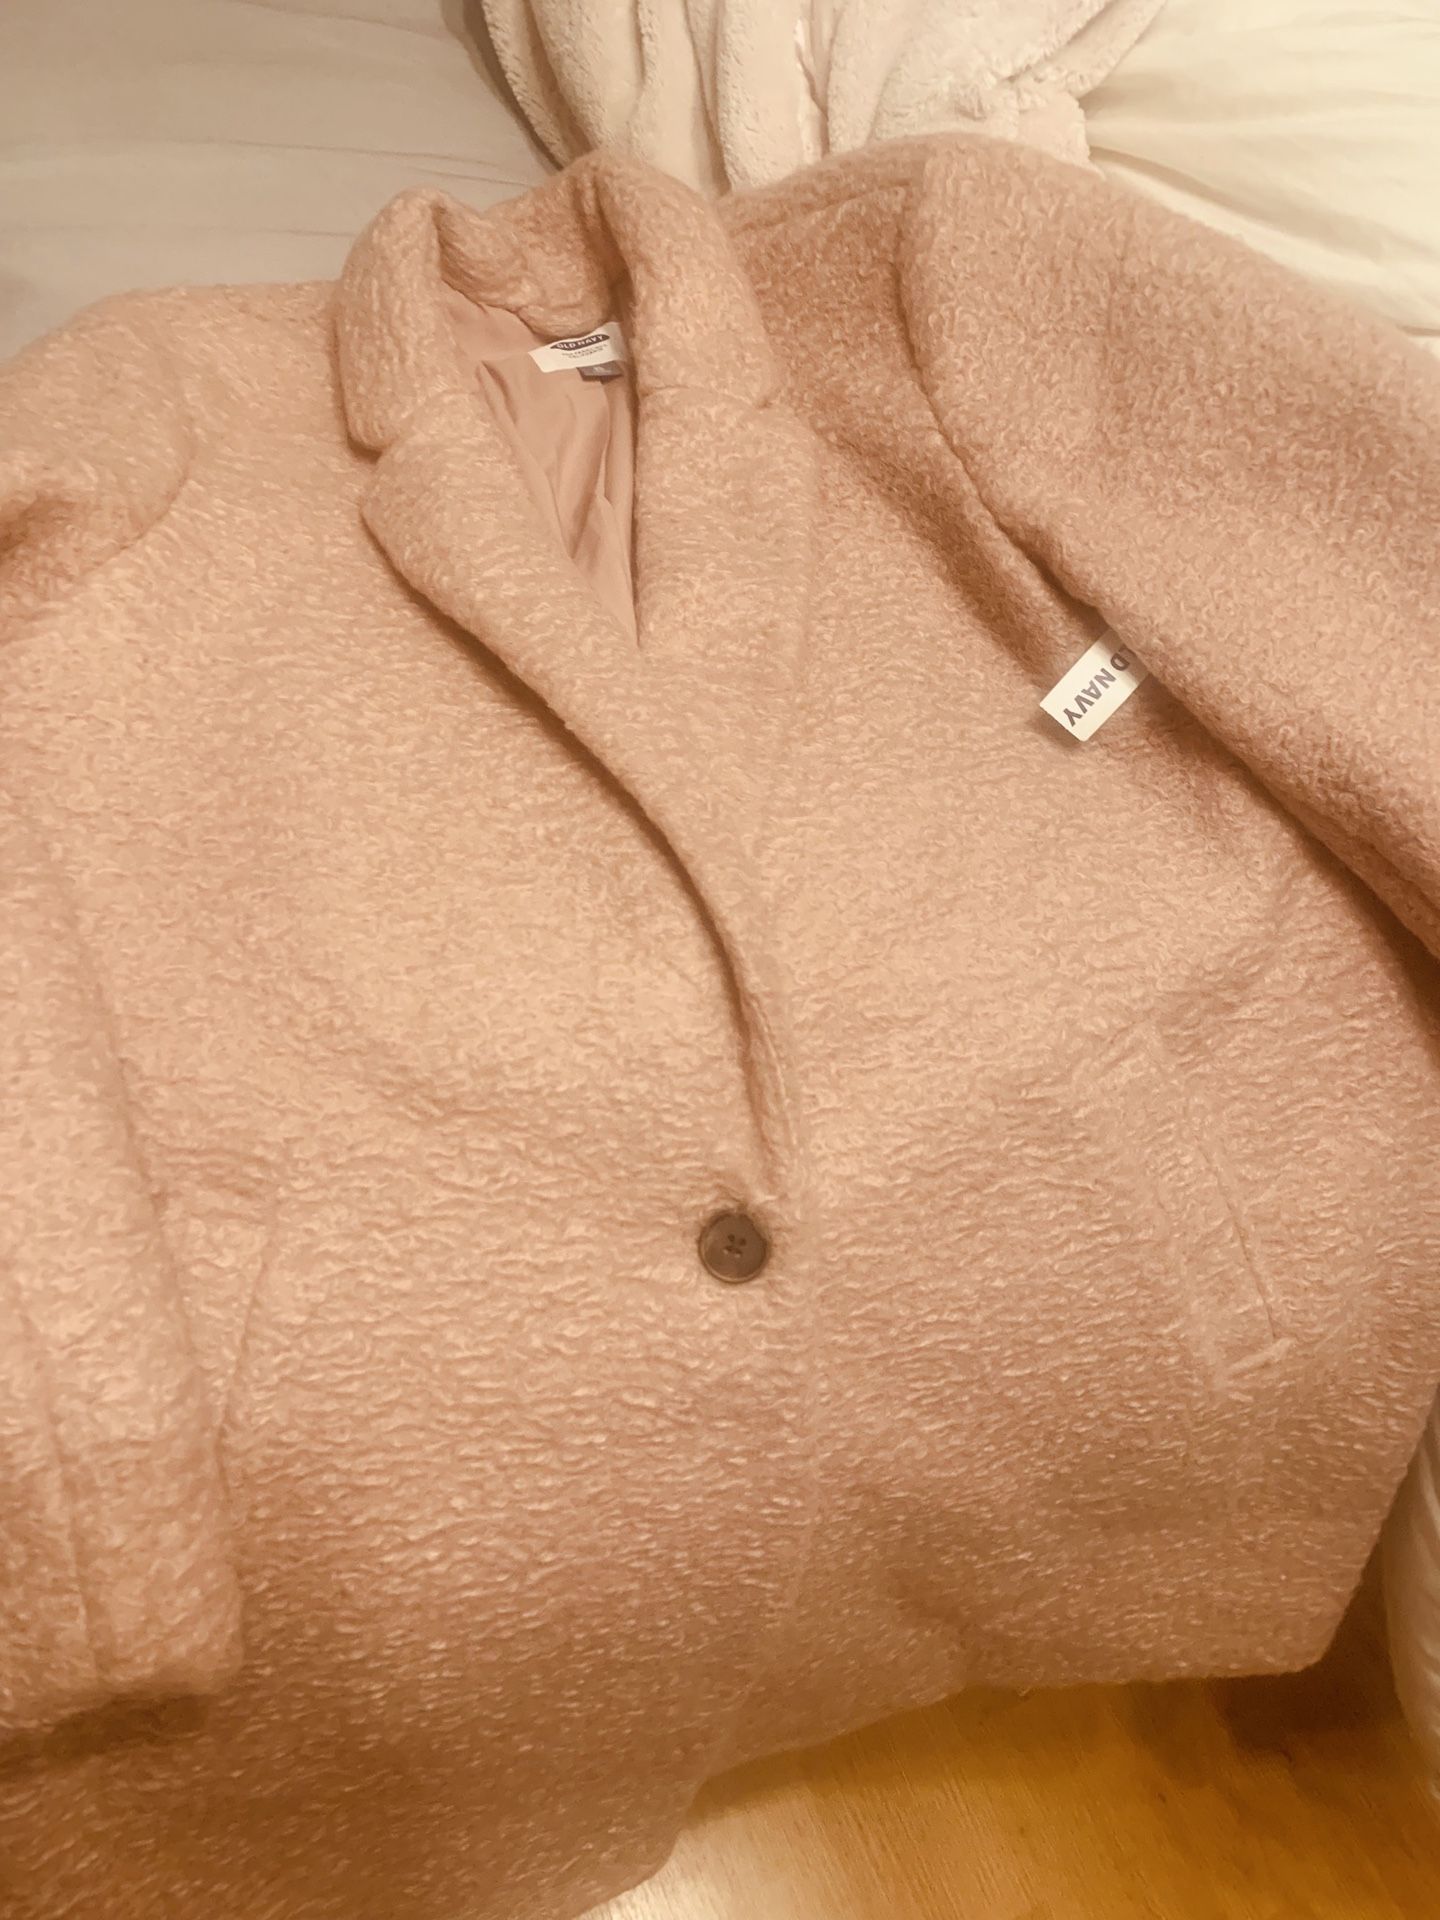 Brand New XL Women’s Pea Coat. Very Pretty Light Pink